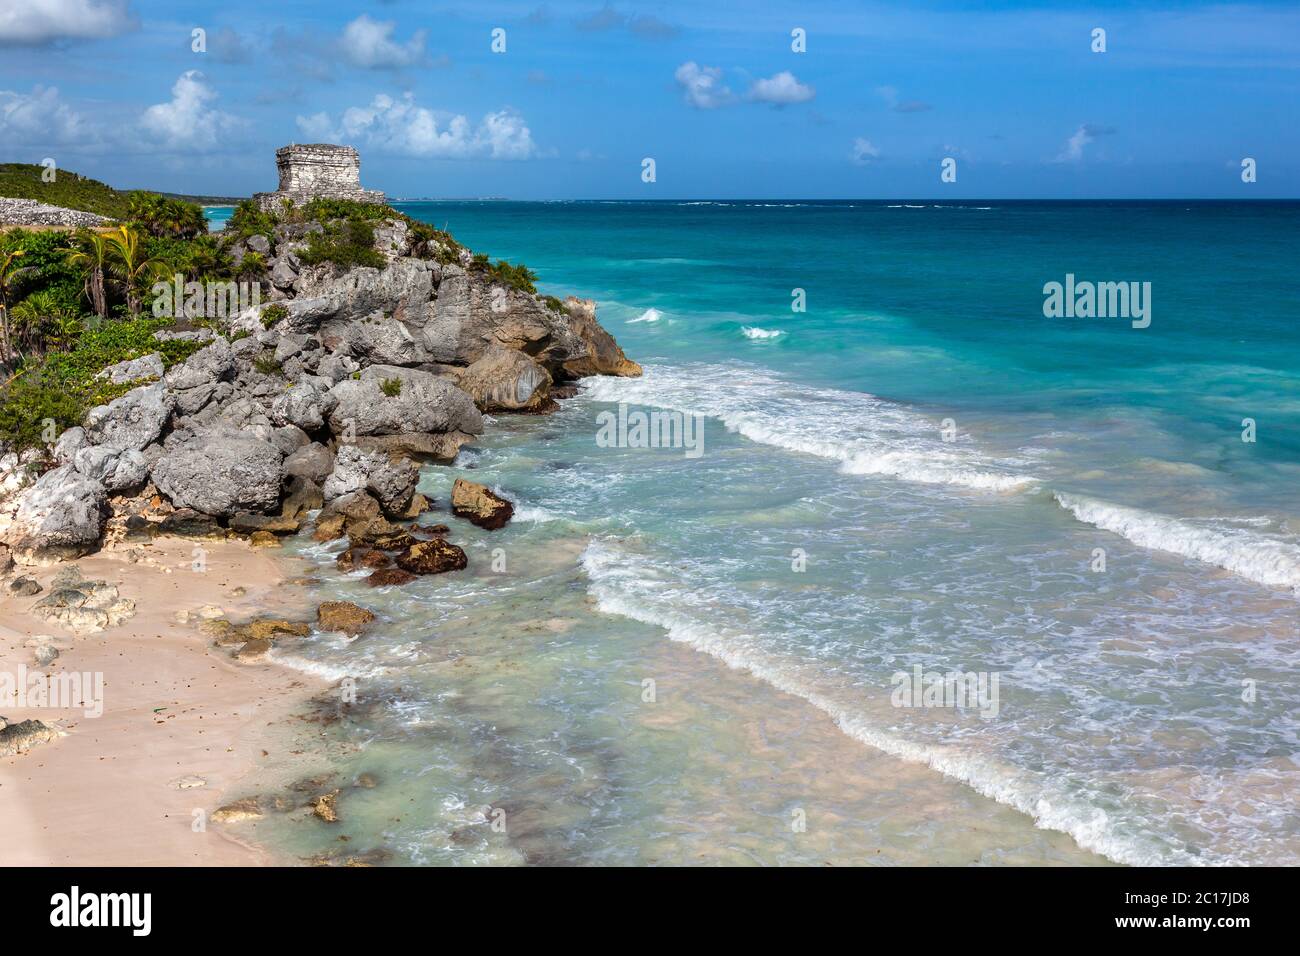 Mayan ruins over Caribbean Sea Stock Photo